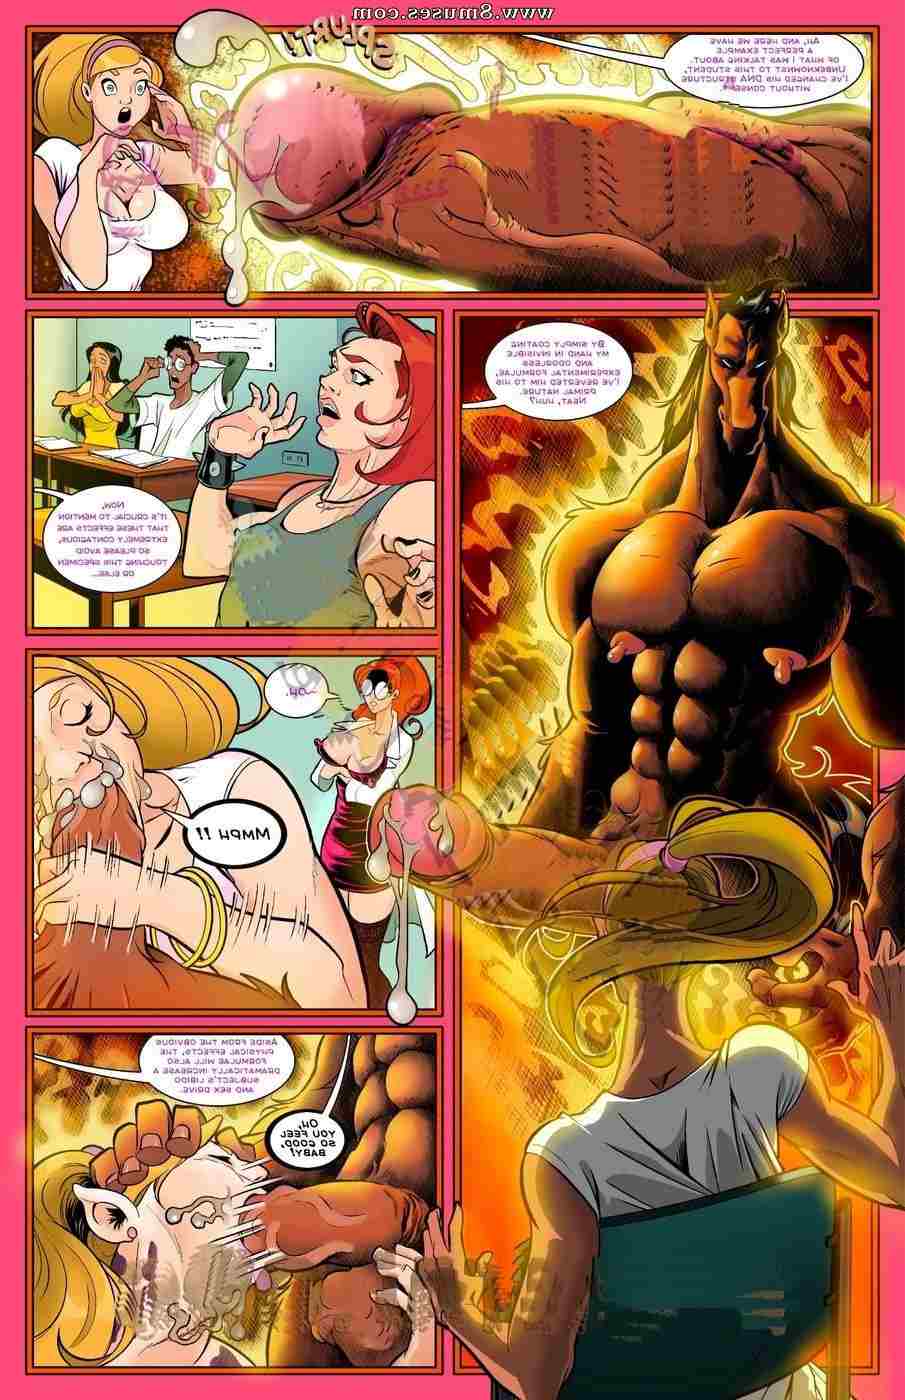 BE-Story-Club-Comics/Dr-Does-Devilry-Guinea-Pigs Dr_Does_Devilry_-_Guinea_Pigs__8muses_-_Sex_and_Porn_Comics_6.jpg